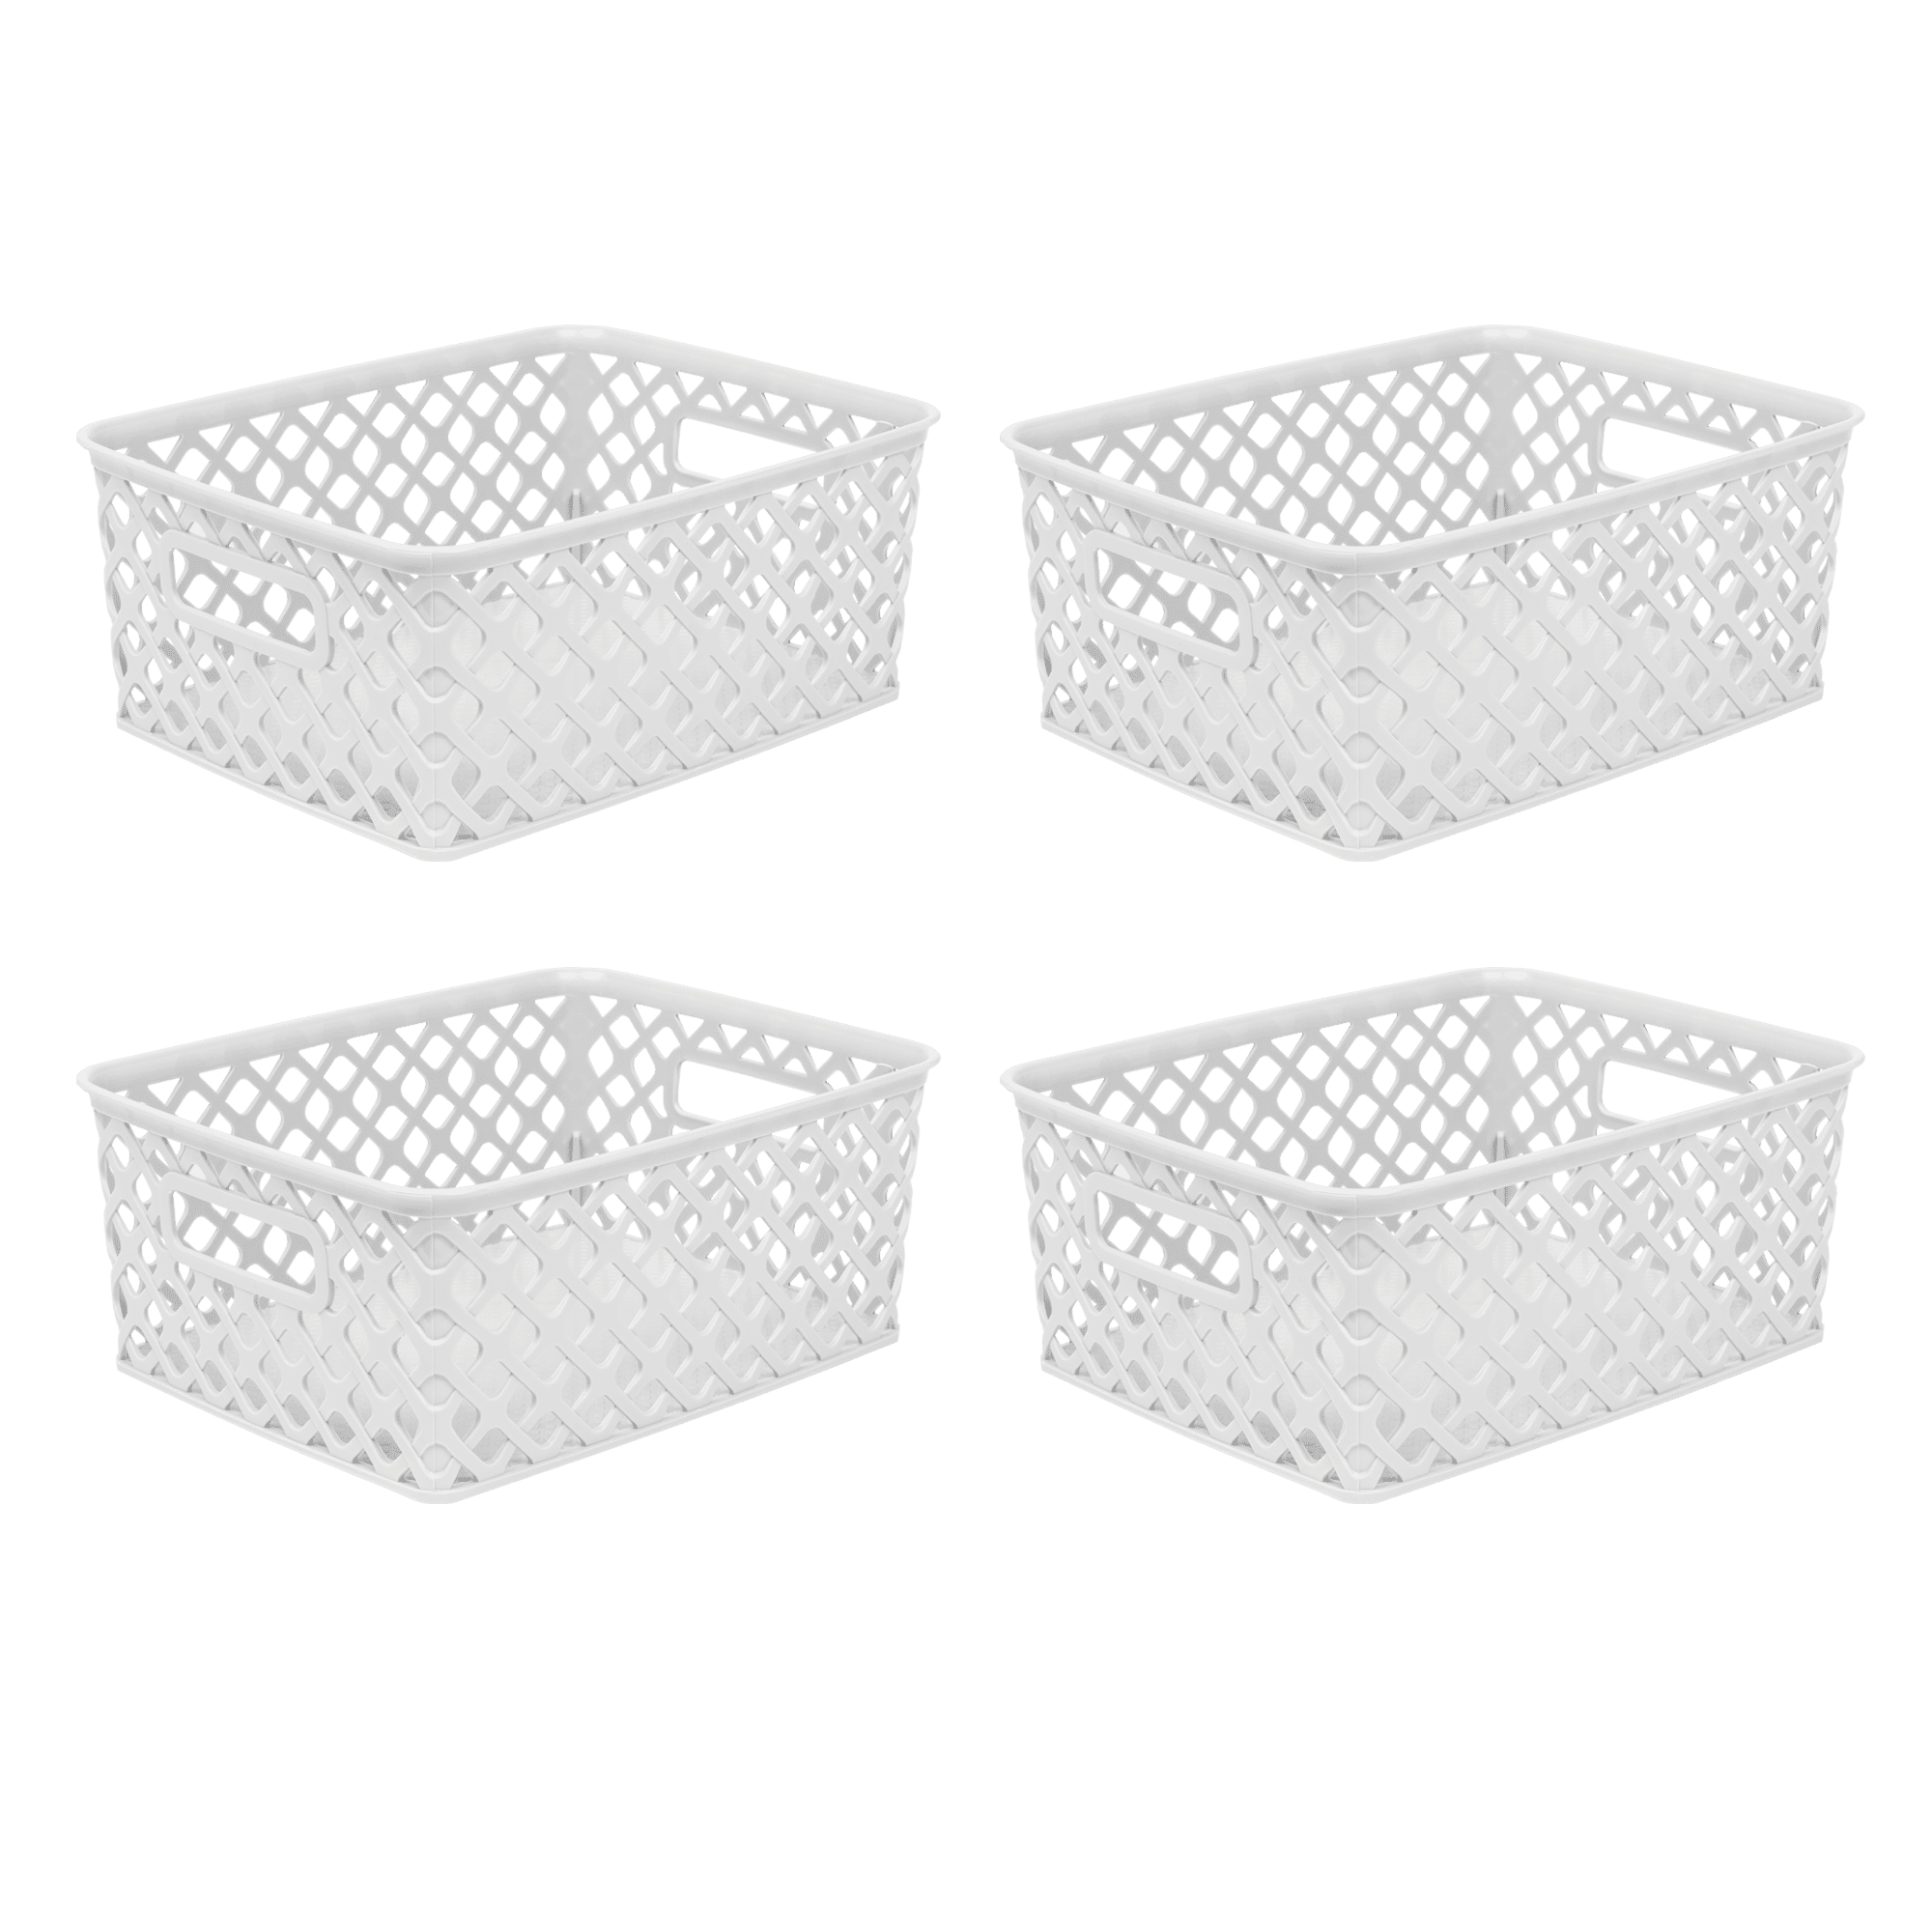 Badger Basket 3-Piece Wicker Basket Set, White